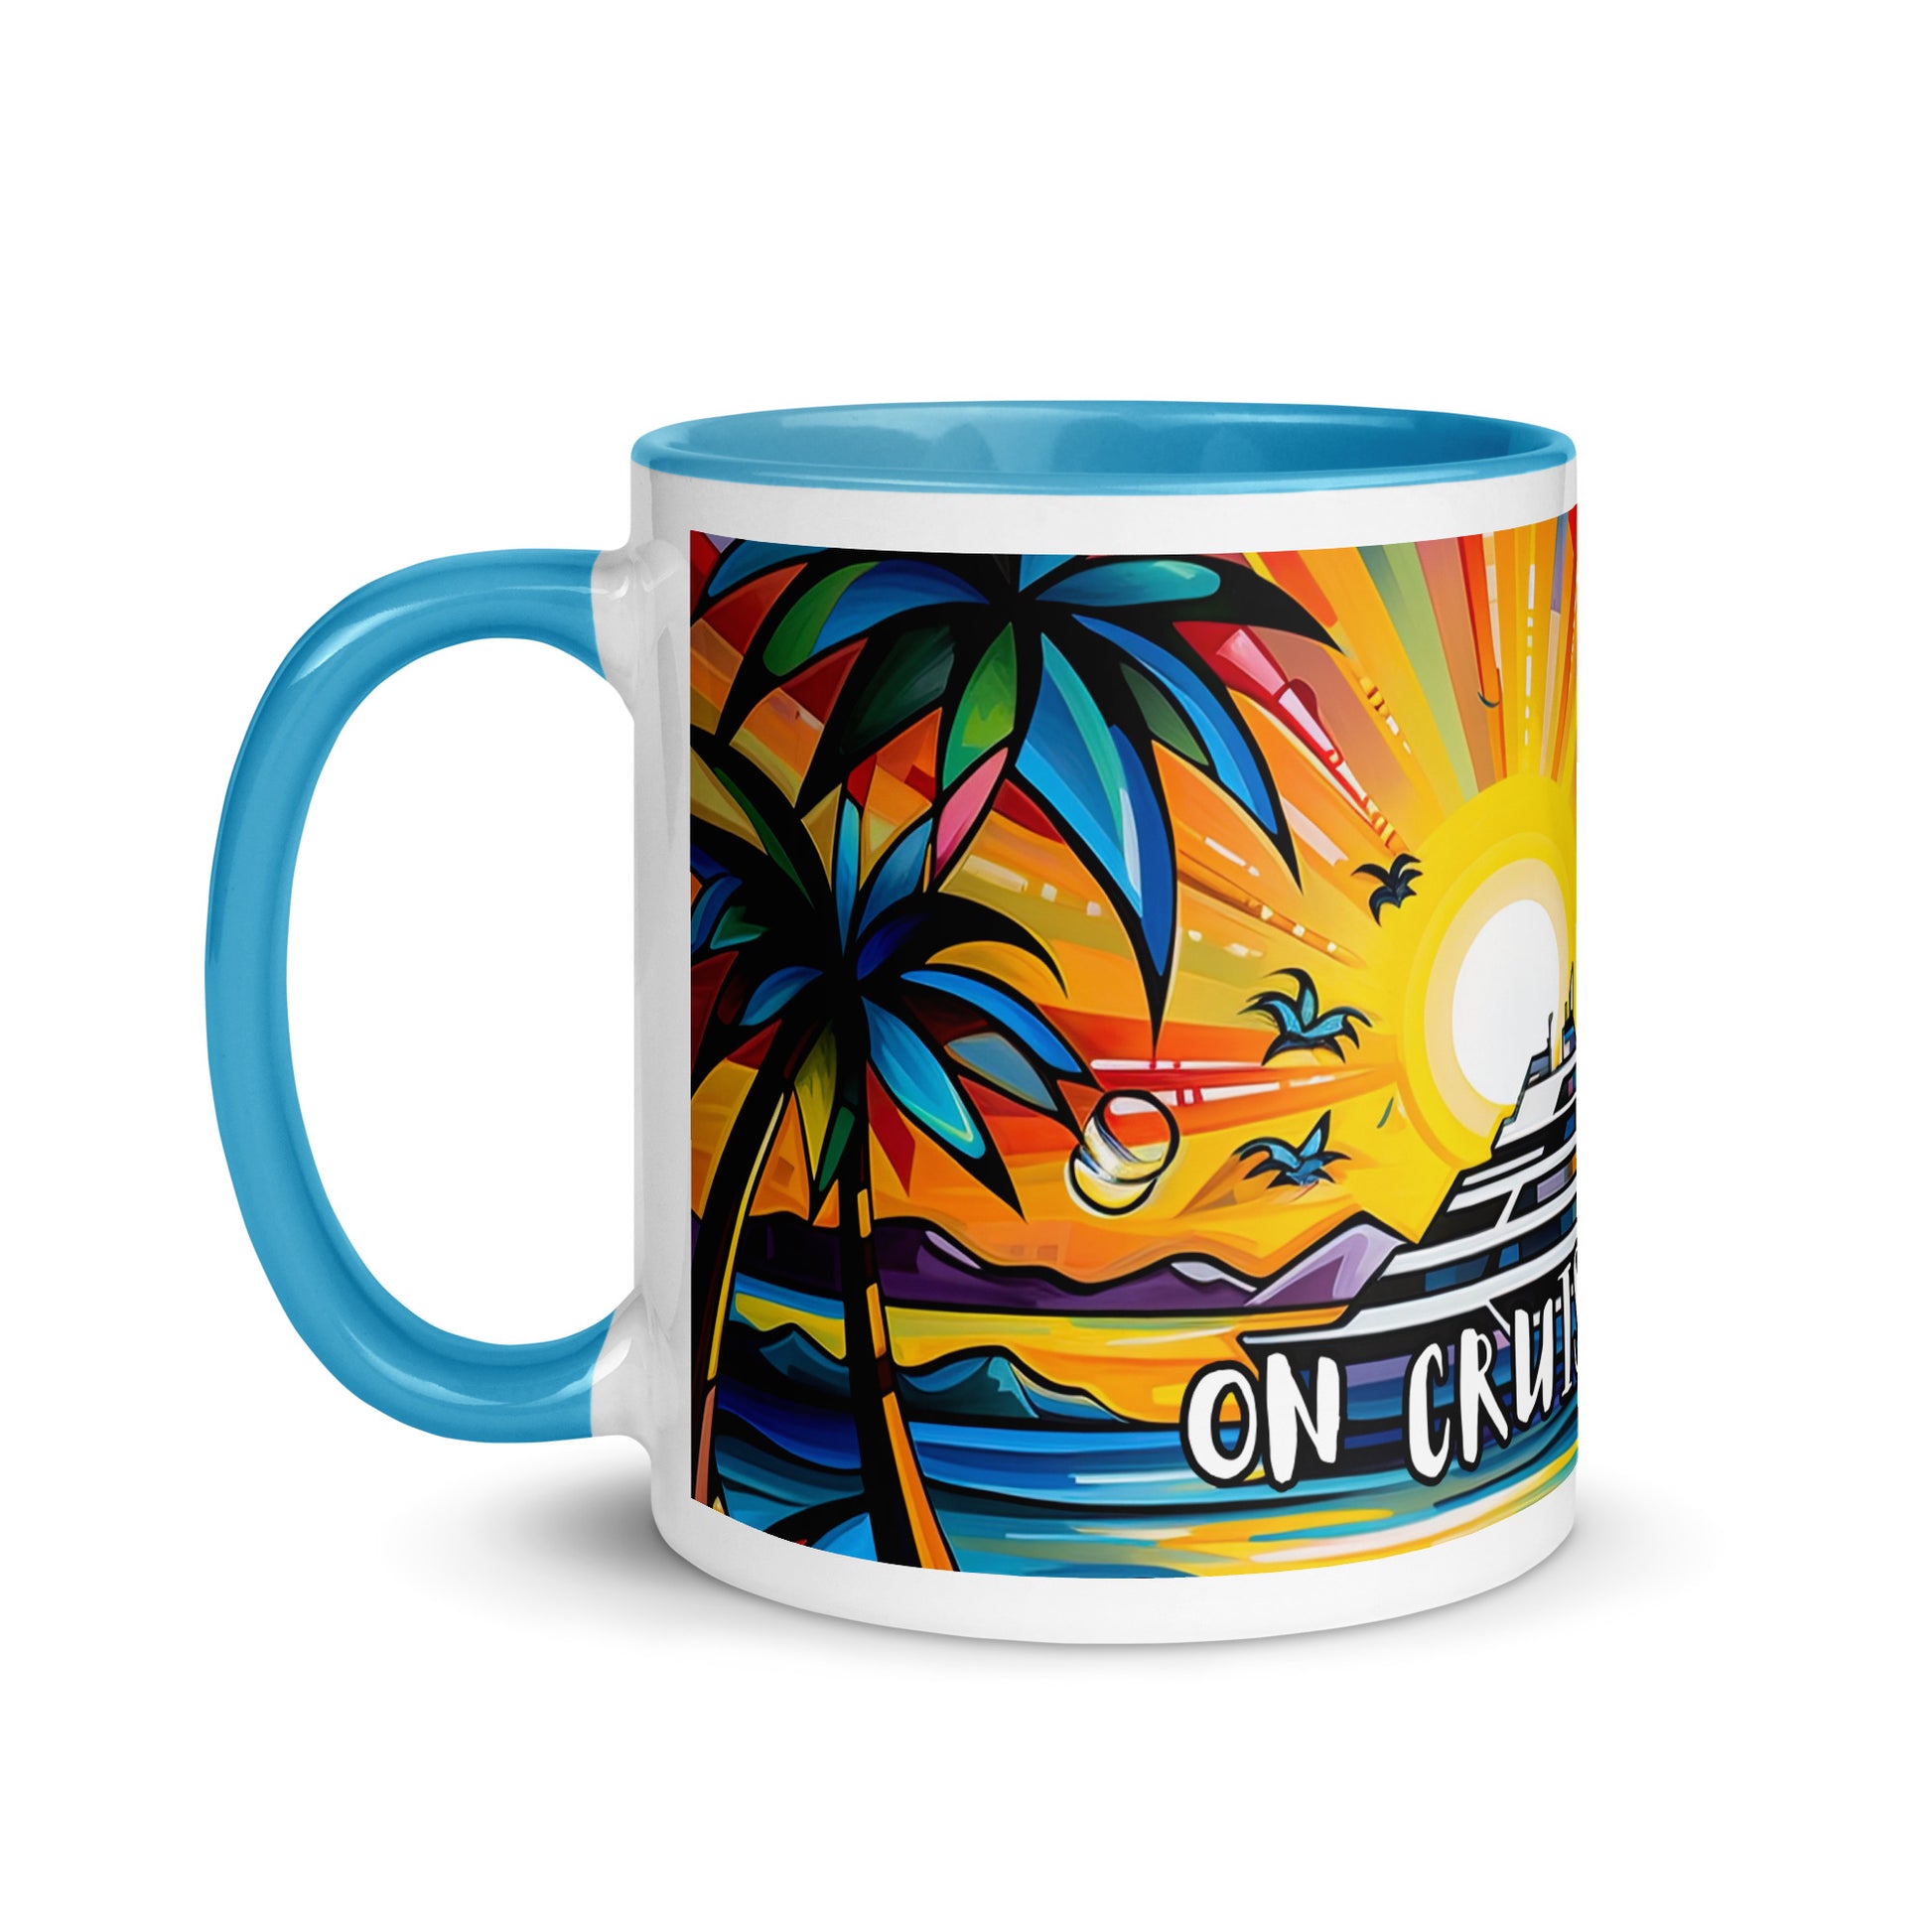 On Cruise Control Mug with Color Inside - Sunshine on the Seas